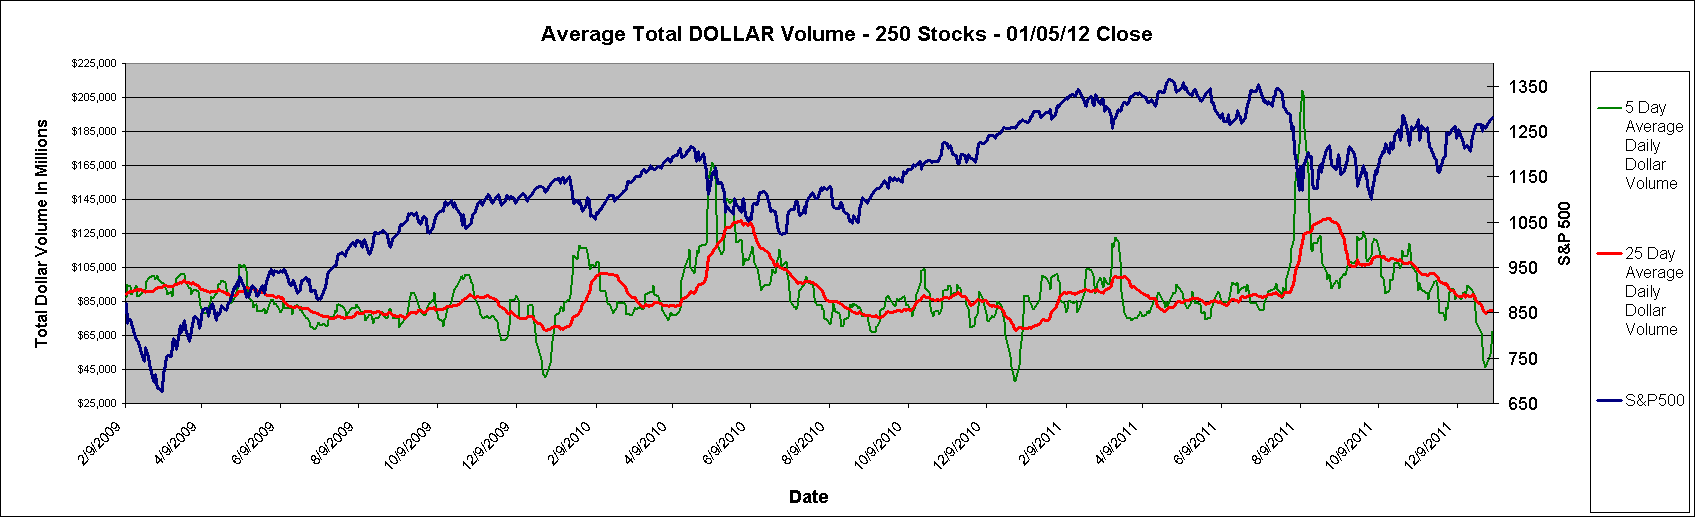 Average Total DOLLAR Volume - 250 Stocks - 01/05/12 Close